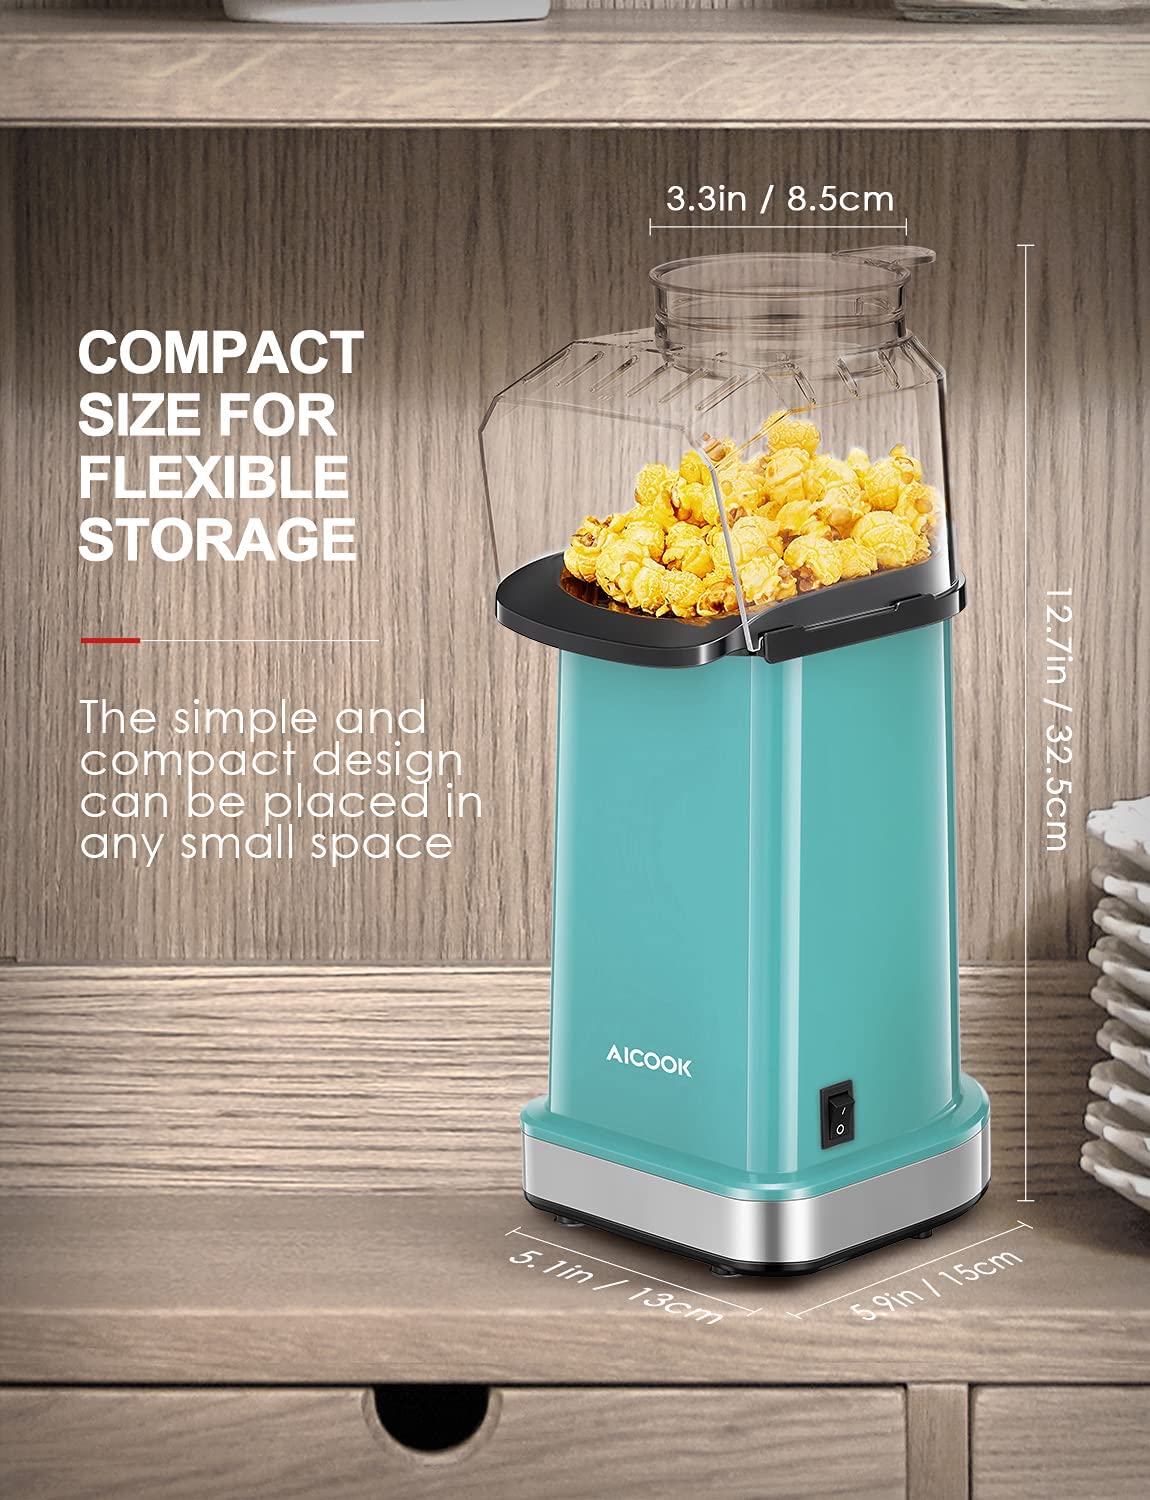 Mini Popcorn Machine Oil Healthy Hot Air Popcorn Maker For Home